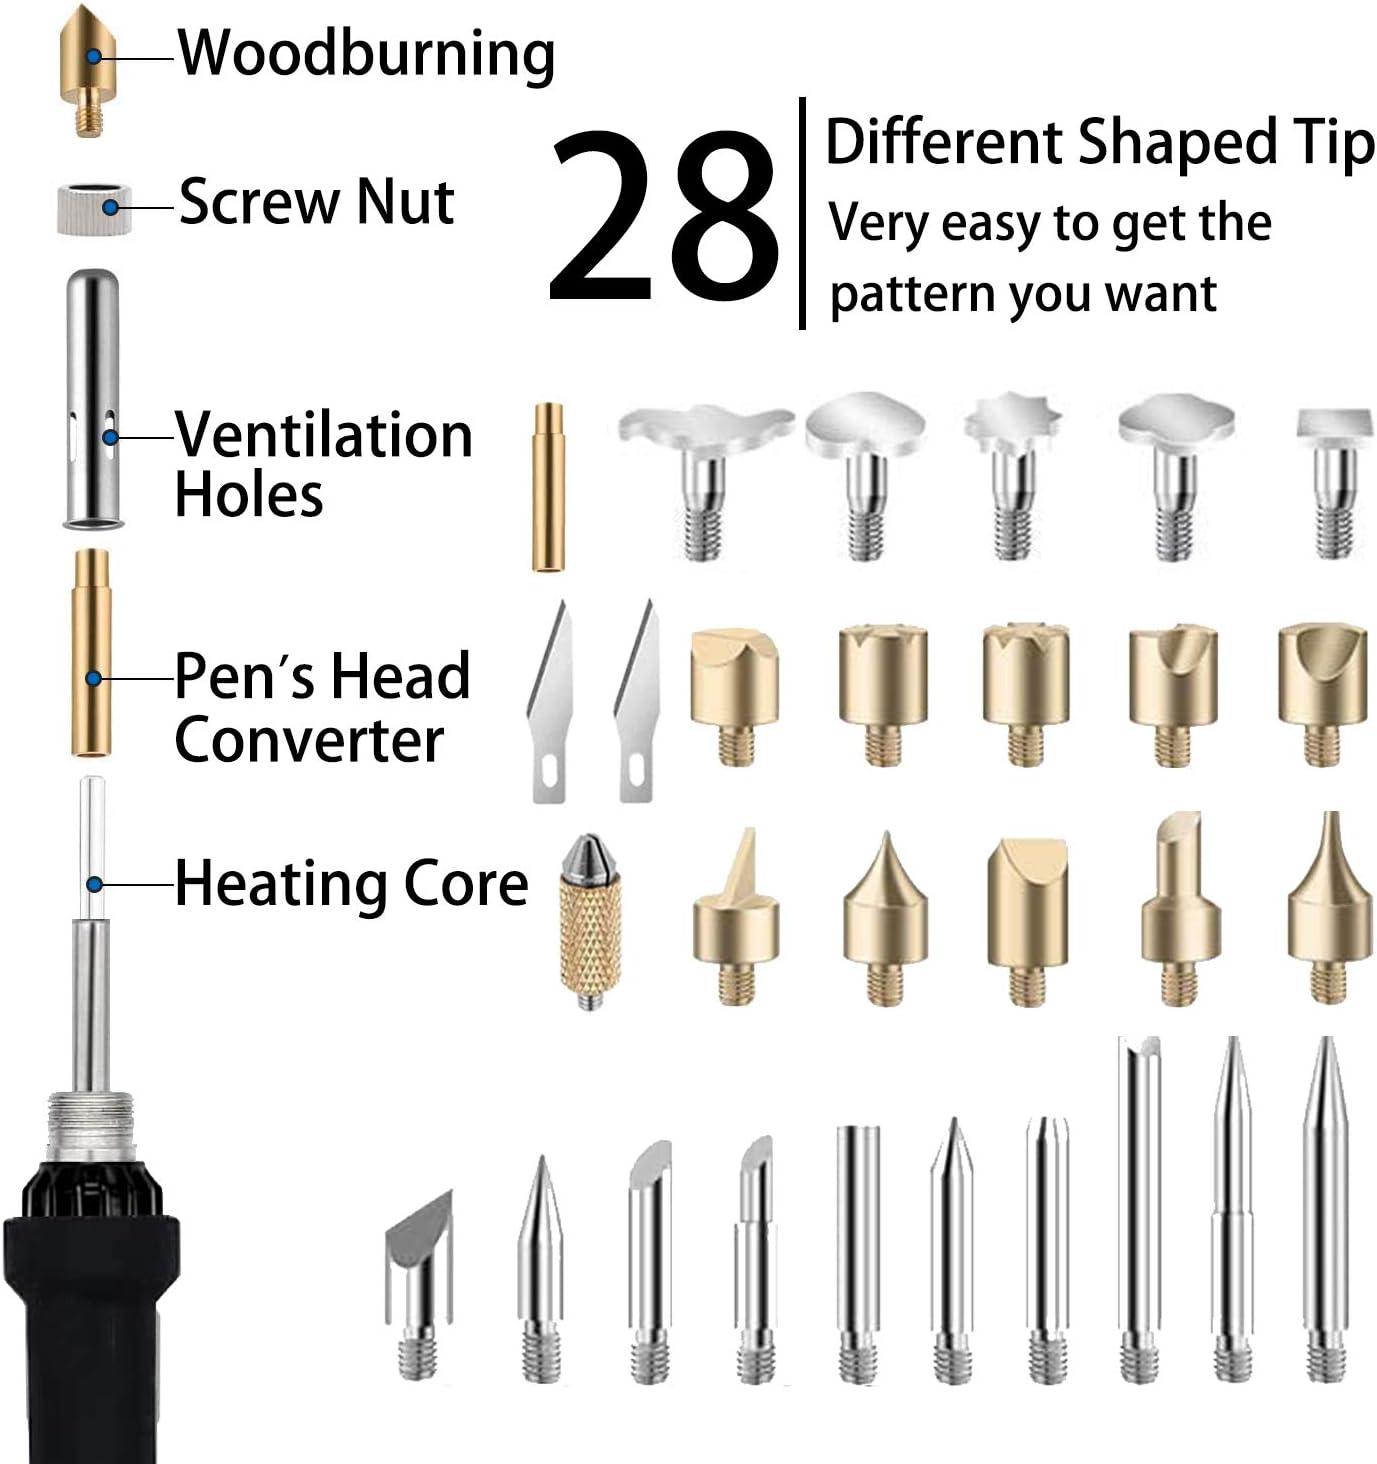 TOOKO 96pcs Wood Burning Kit, Professional Wood Burner Pen Tool, Creative  Tool Set Adjustable Temperature WoodBurner for